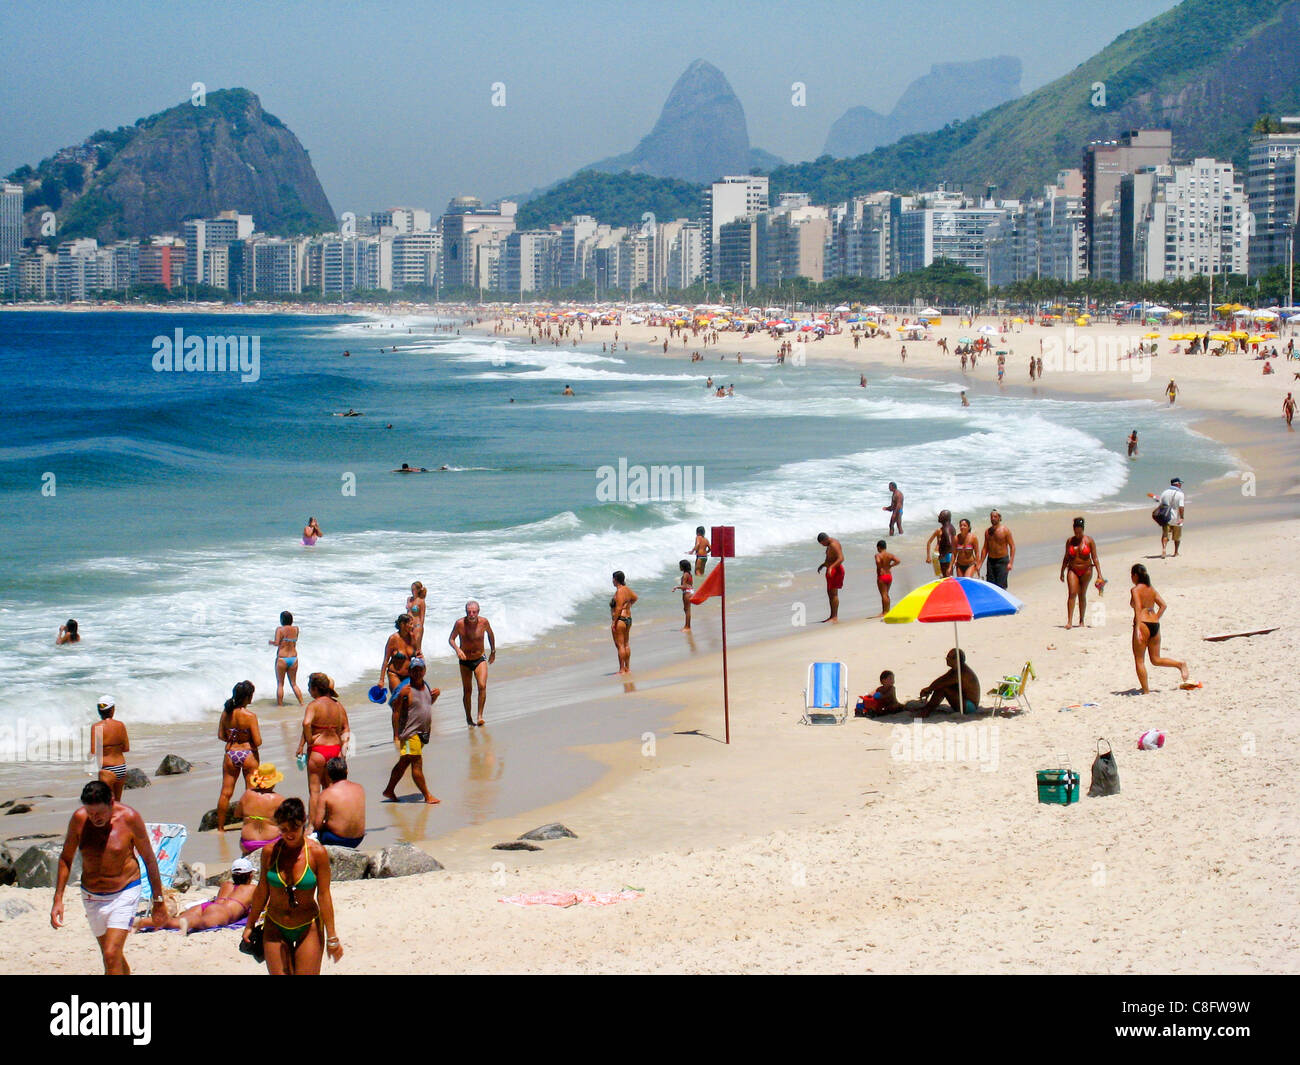 Copacabana Beach, full of bathers, sunbathers and colorful umbrellas. Rio de Janiero, Brazil Stock Photo